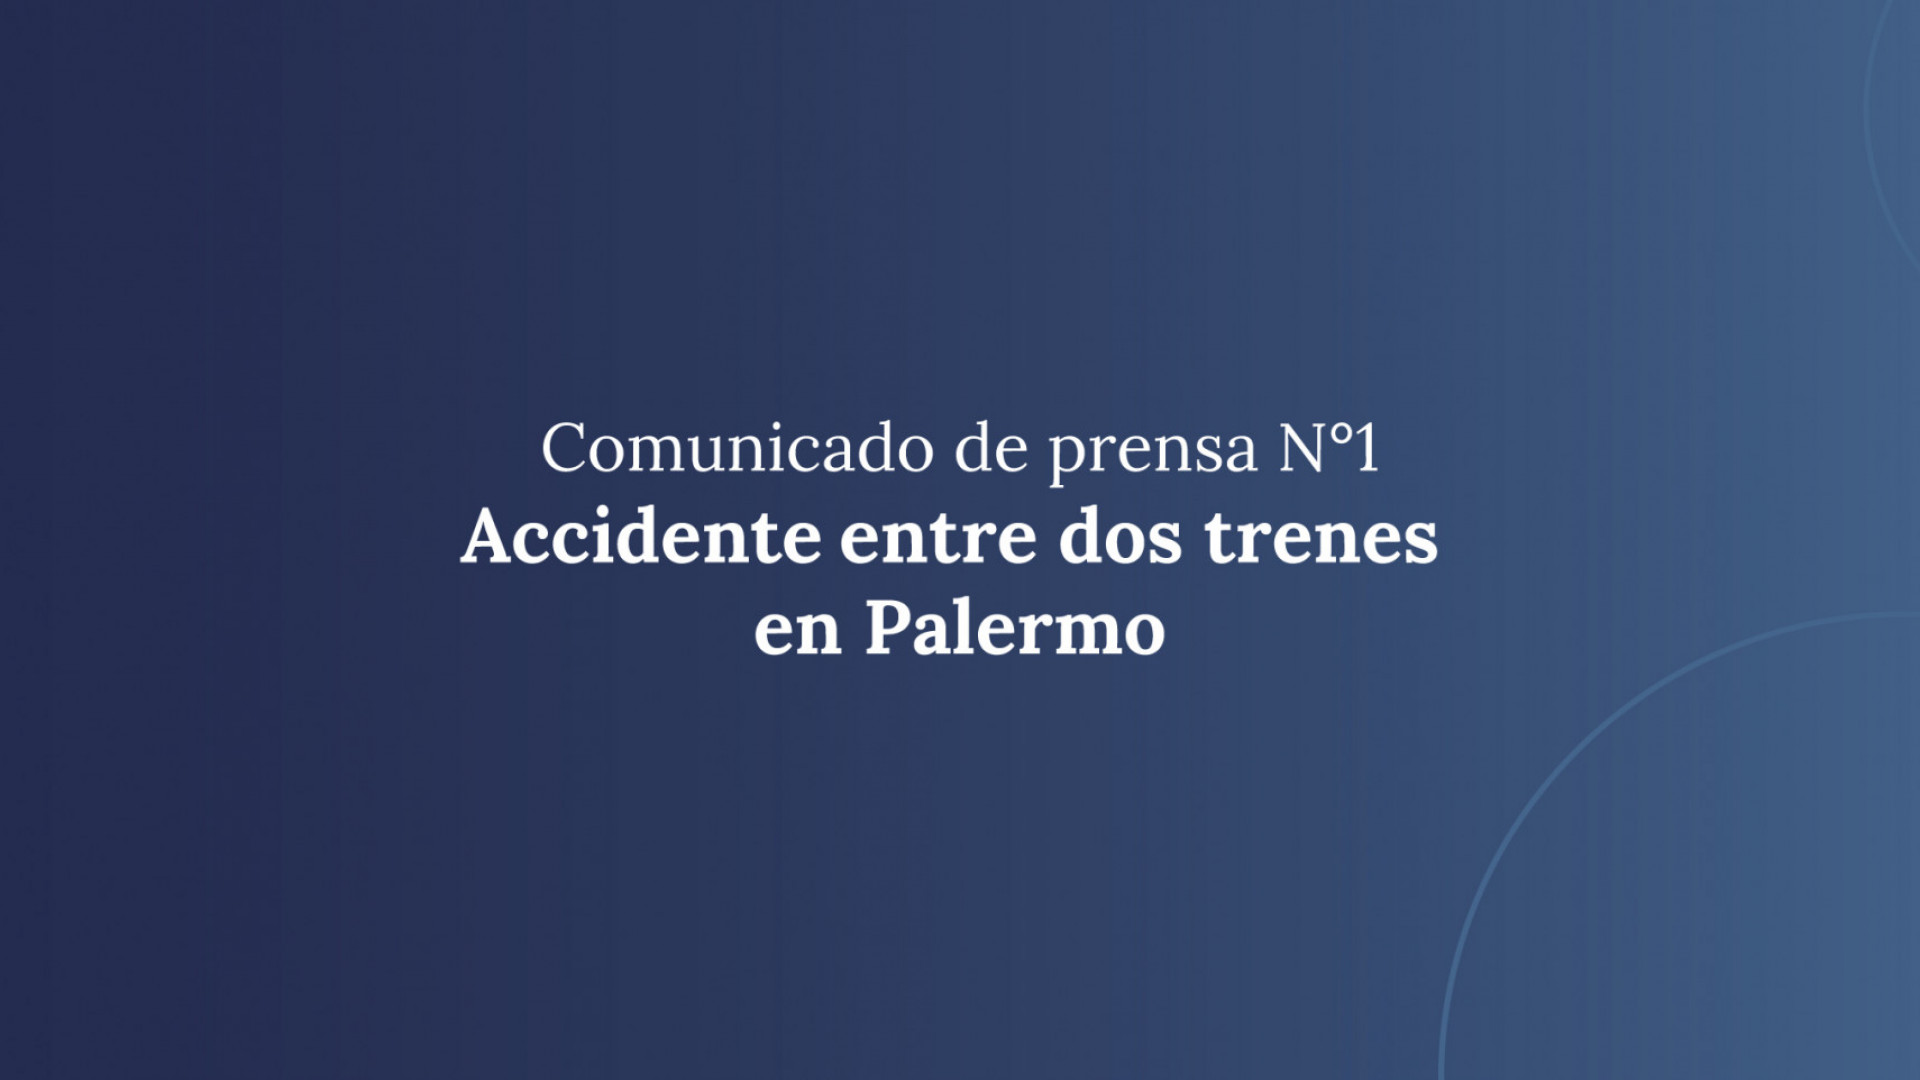 noticiaspuertosantacruz.com.ar - Imagen extraida de: https://argentina.gob.ar/noticias/comunicado-de-prensa-ndeg1-accidente-entre-dos-trenes-en-palermo